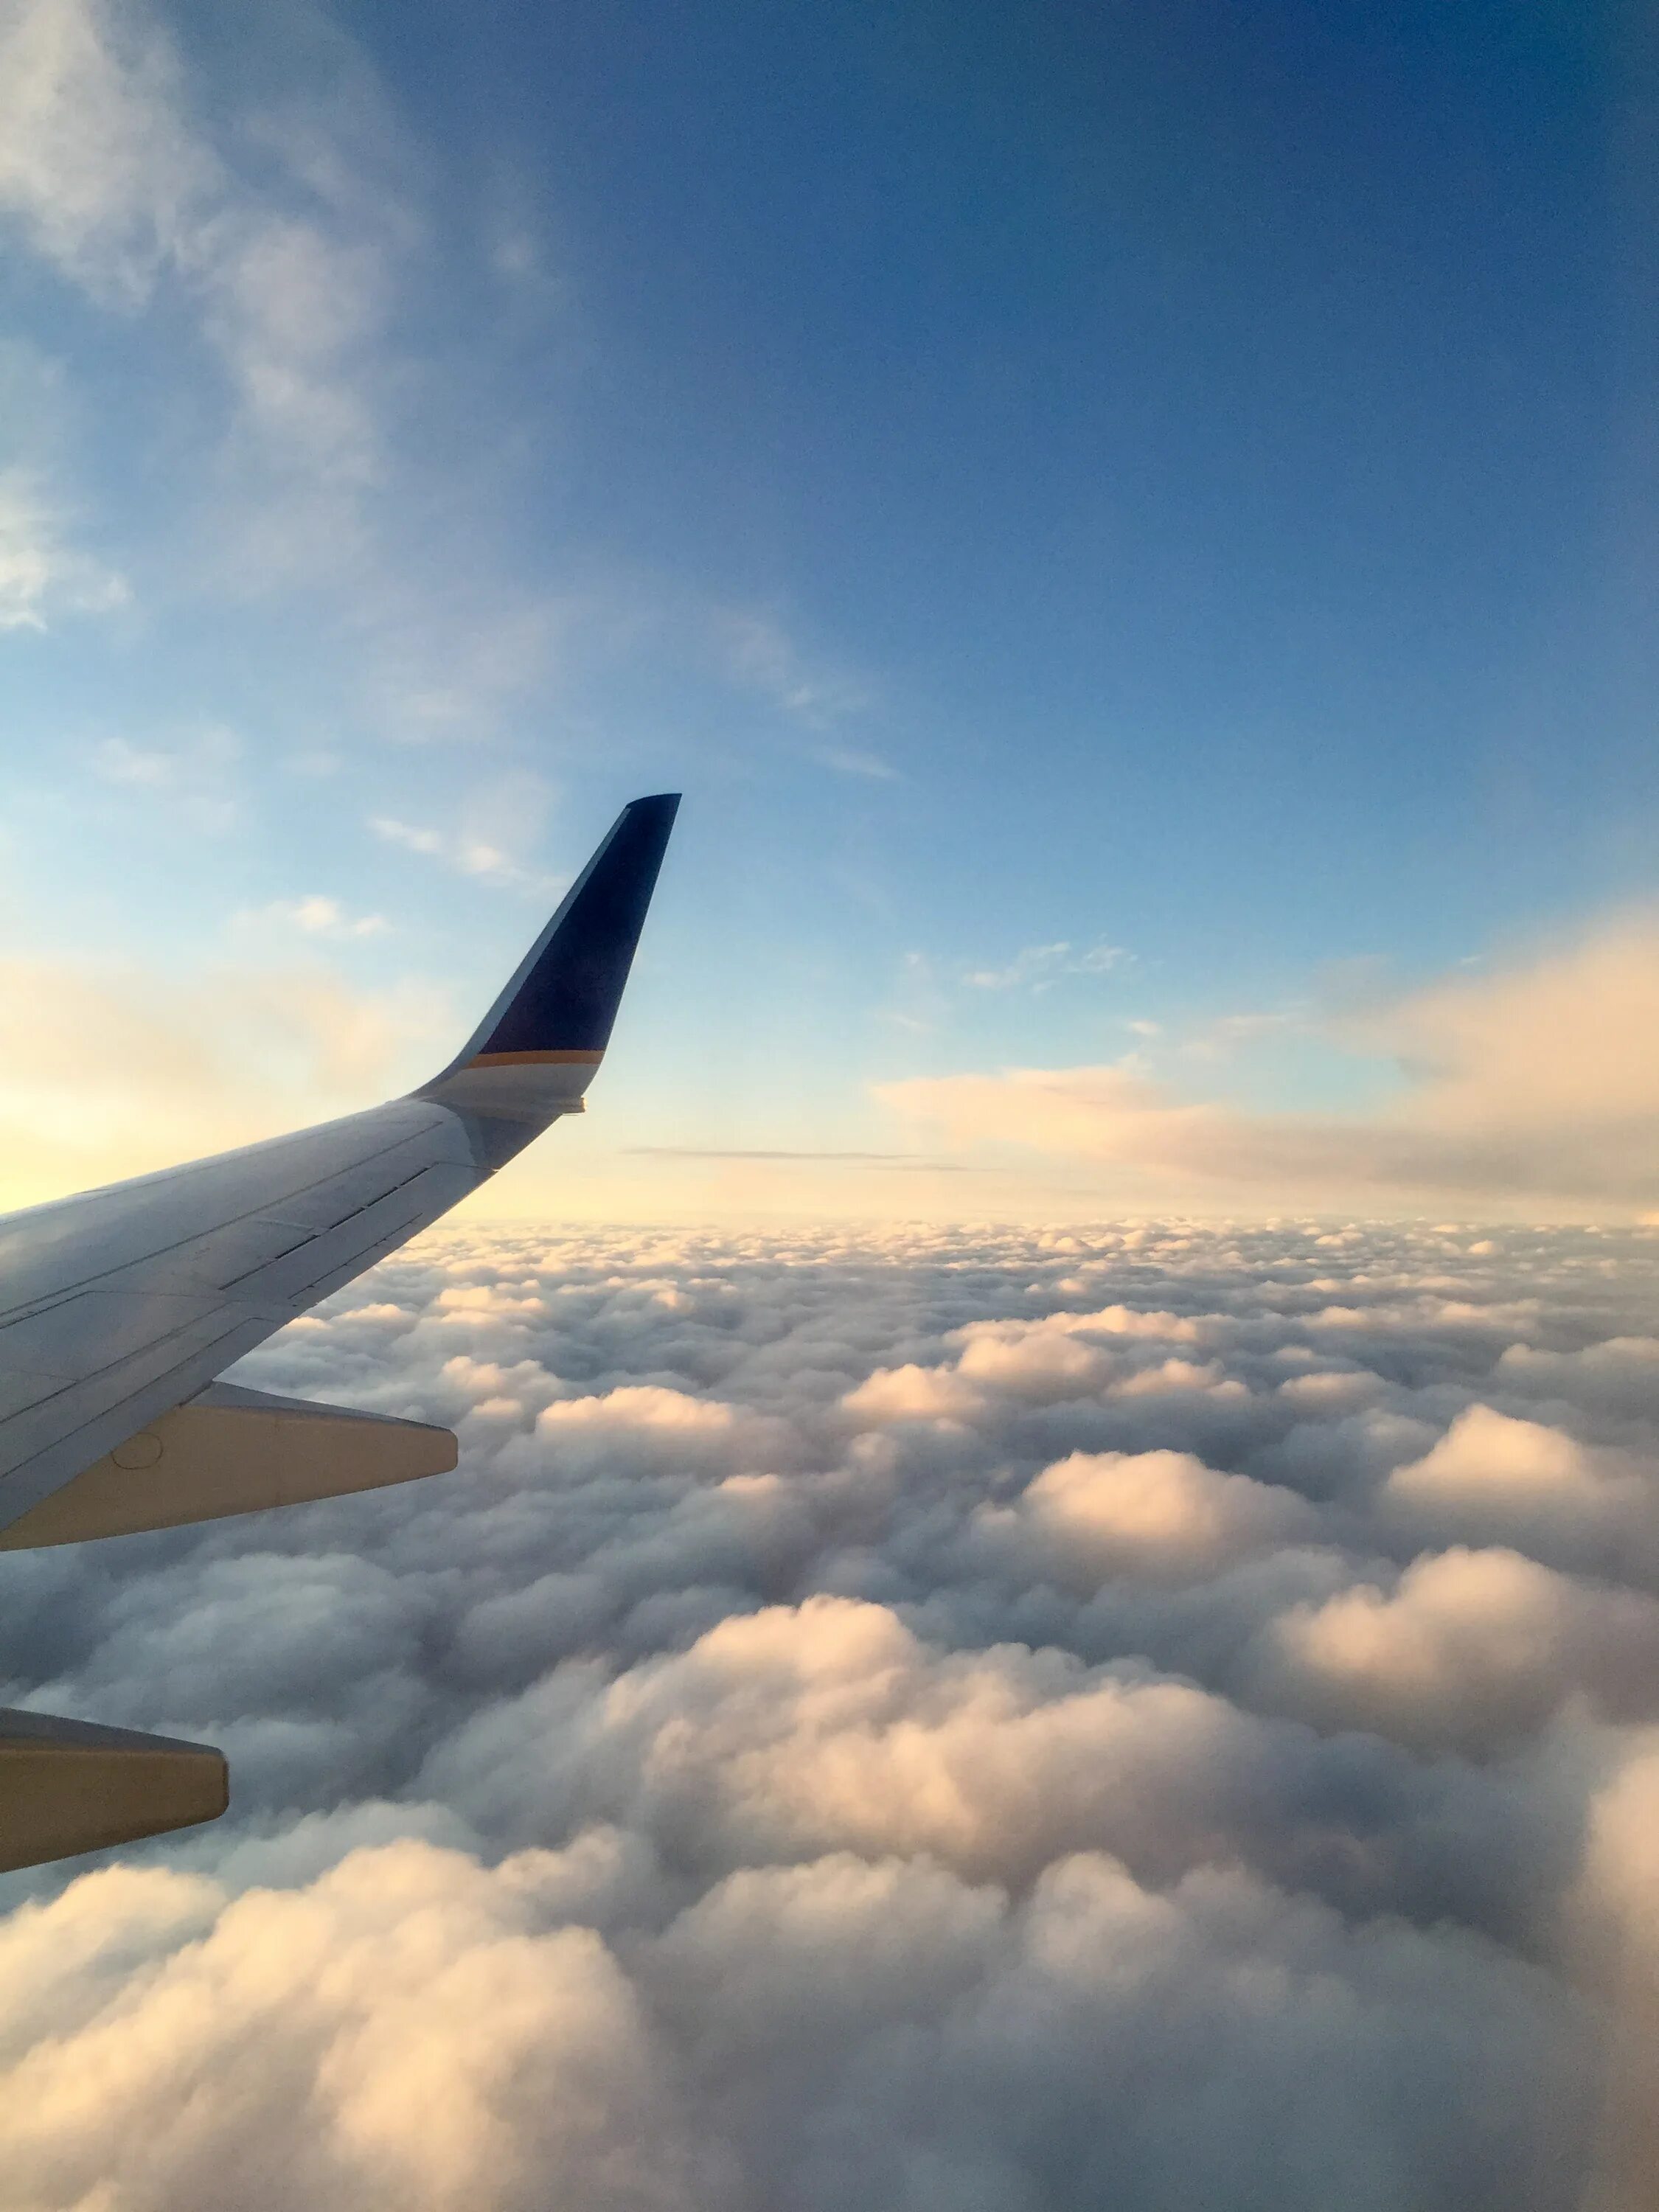 Рука и самолет в небе. Крыло самолета. Самолет в небе. Небо облака самолет. Крыло самолета в небе.